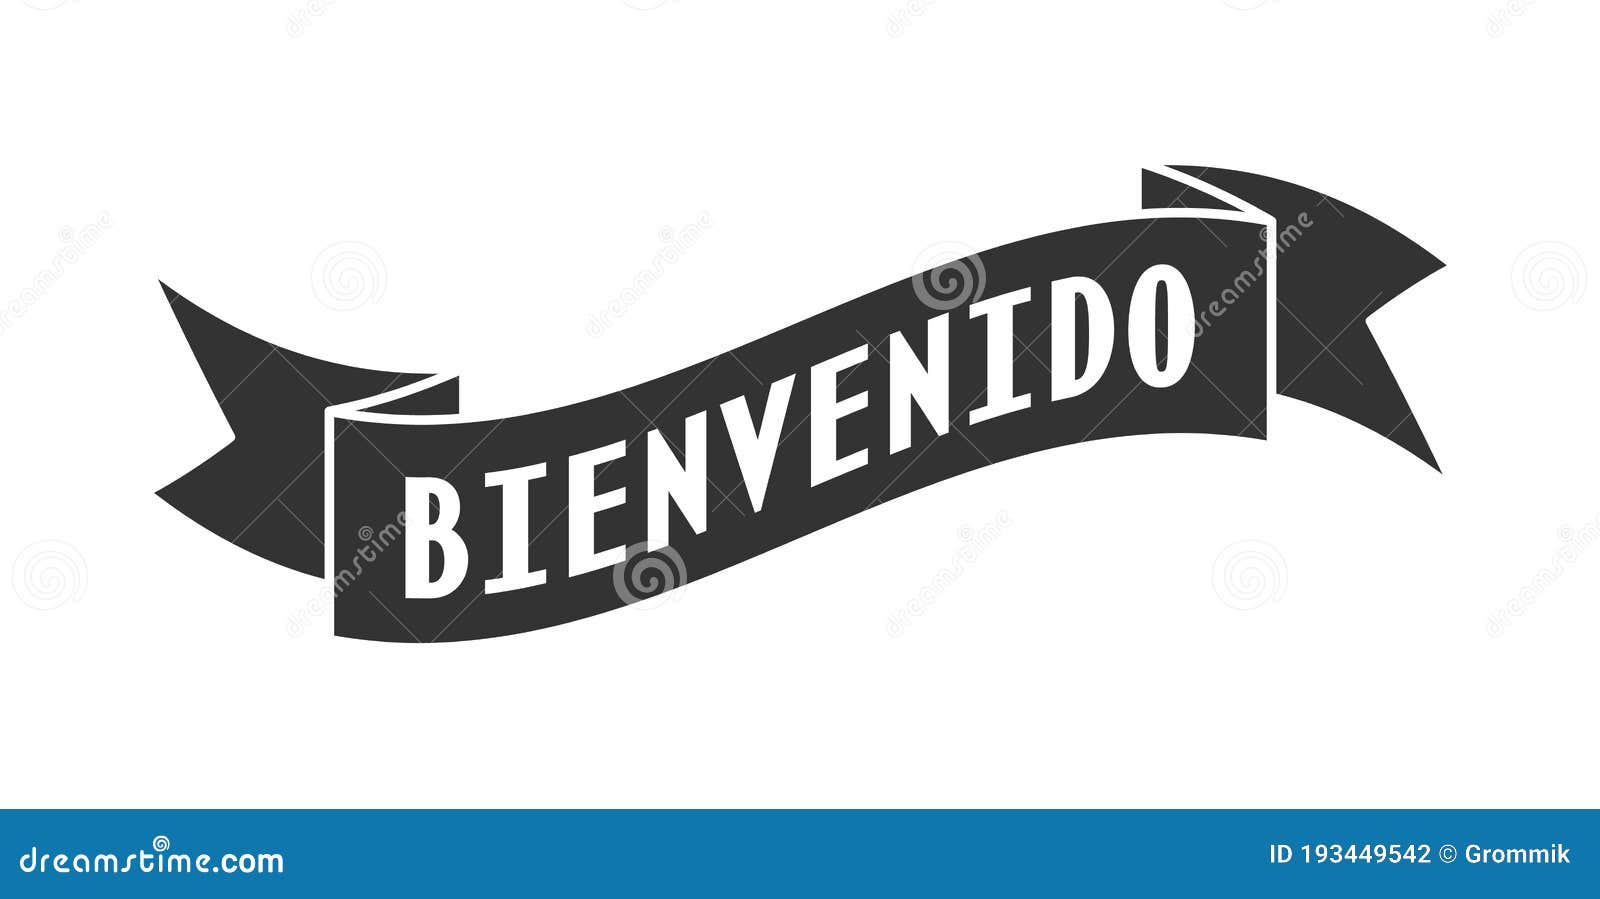 Bienvenido, Welcome Spanish Text Stock Vector - Illustration of caption,  headline: 112542726